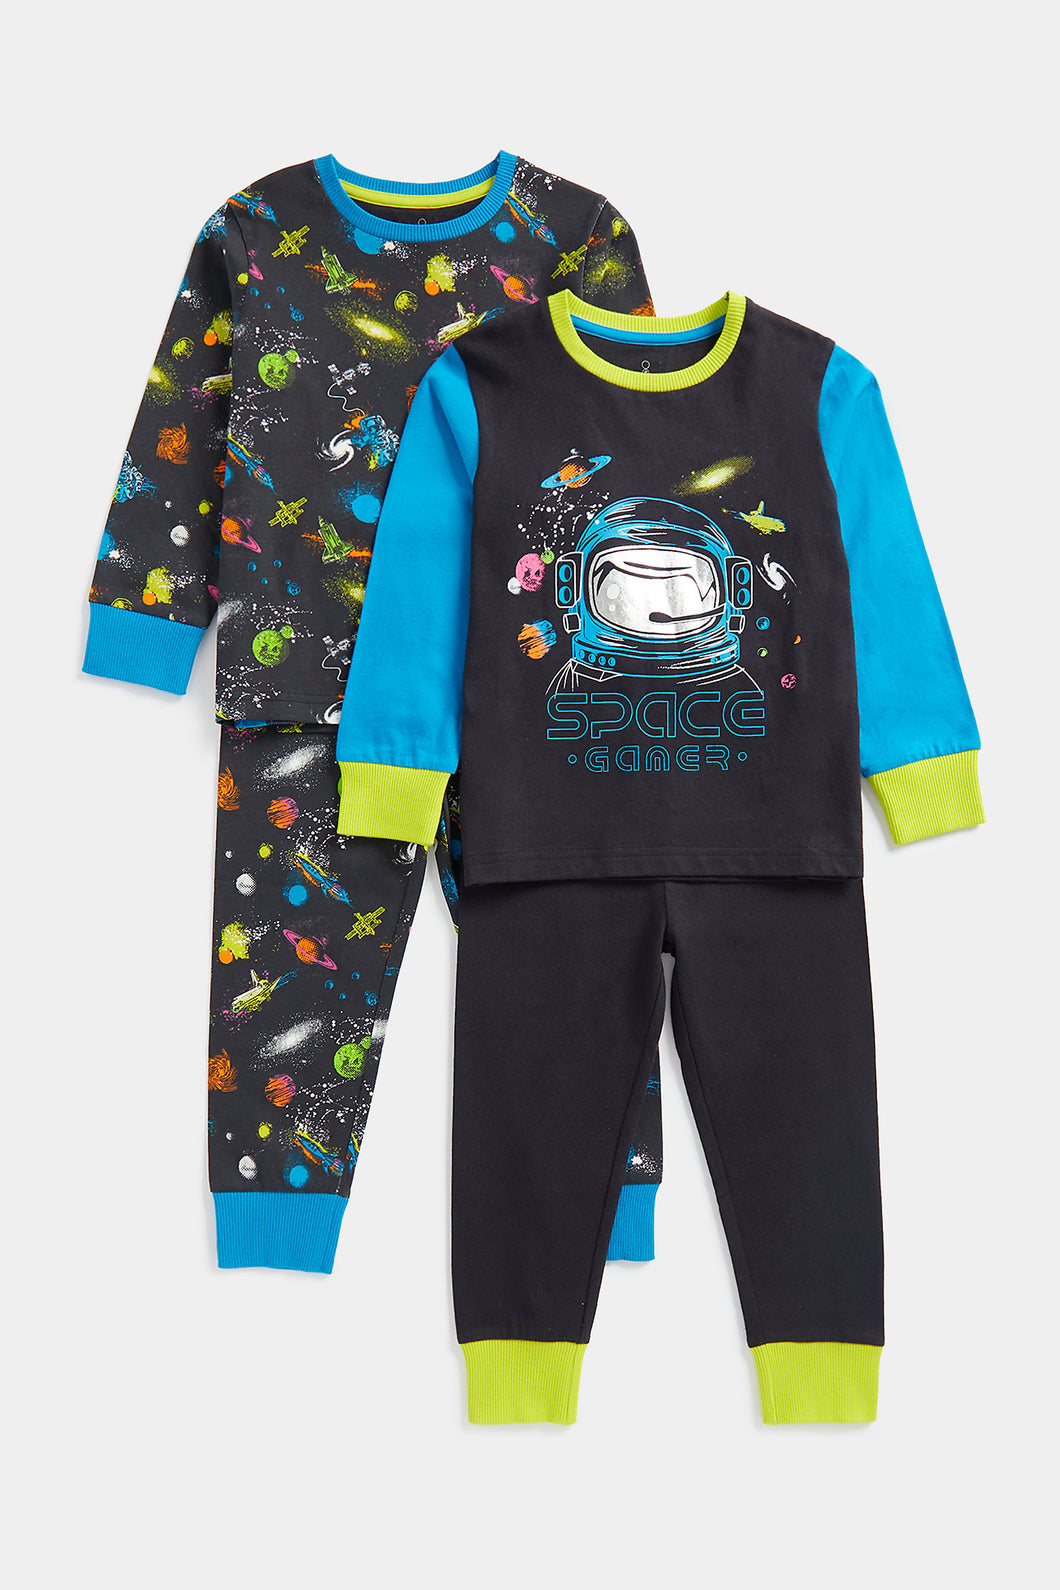 Mothercare Space Gamer Pyjamas - 2 Pack